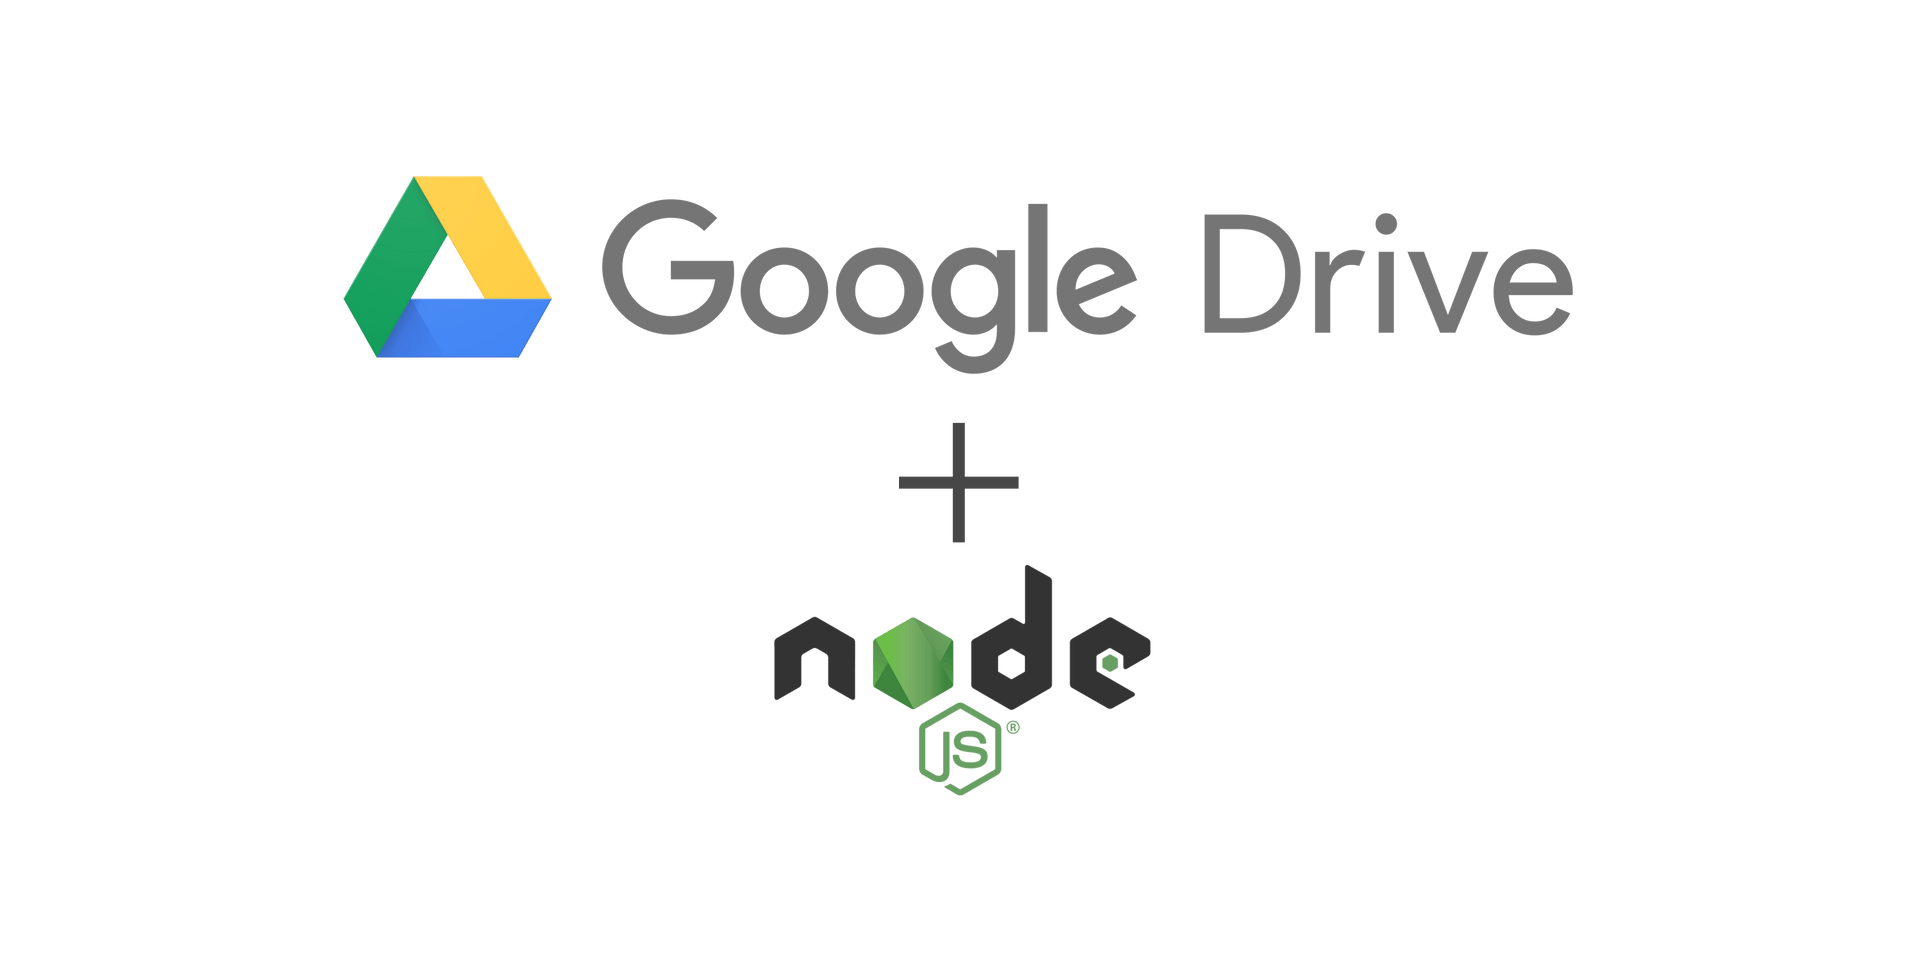 Using the Google Drive API with Node.js